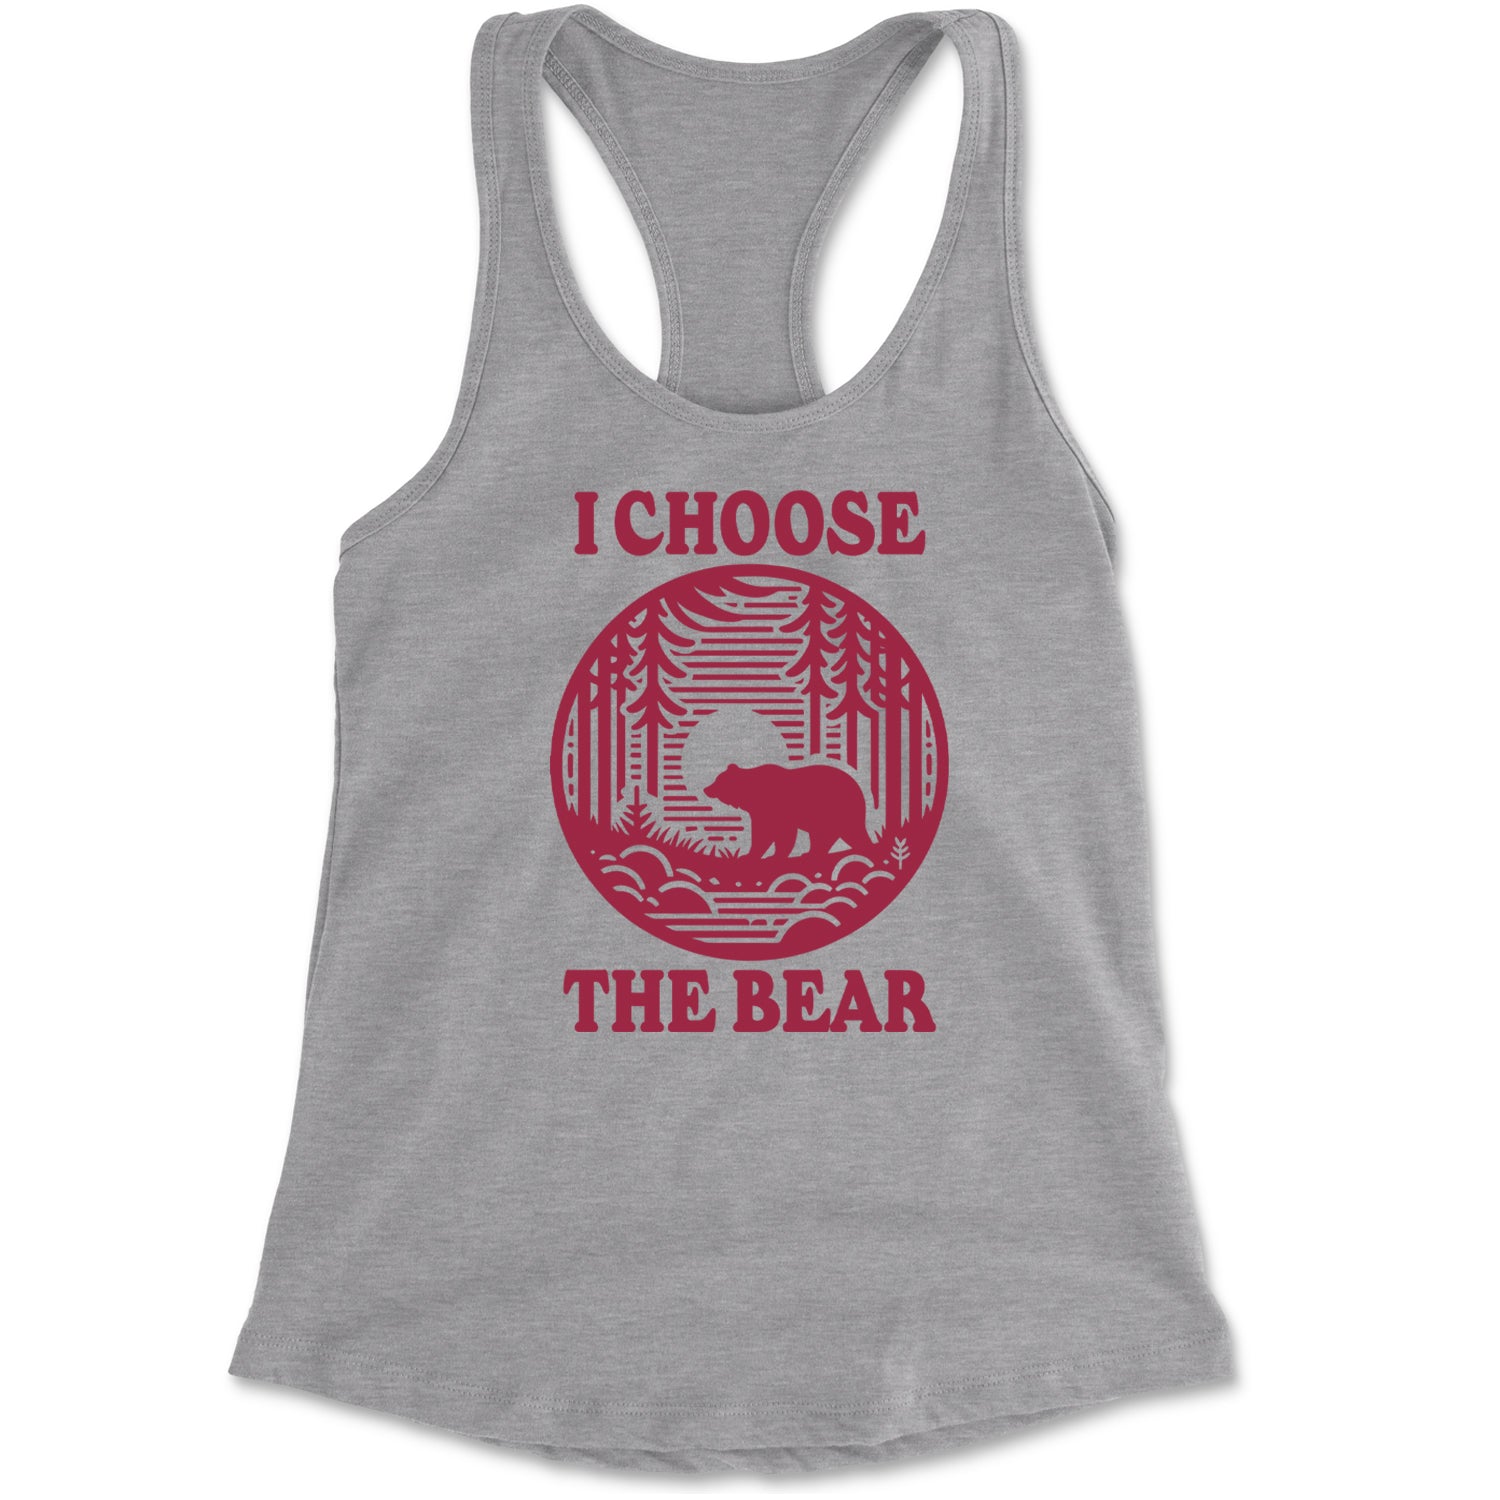 I Choose The Bear Companion Survival Choice Racerback Tank Top for Women